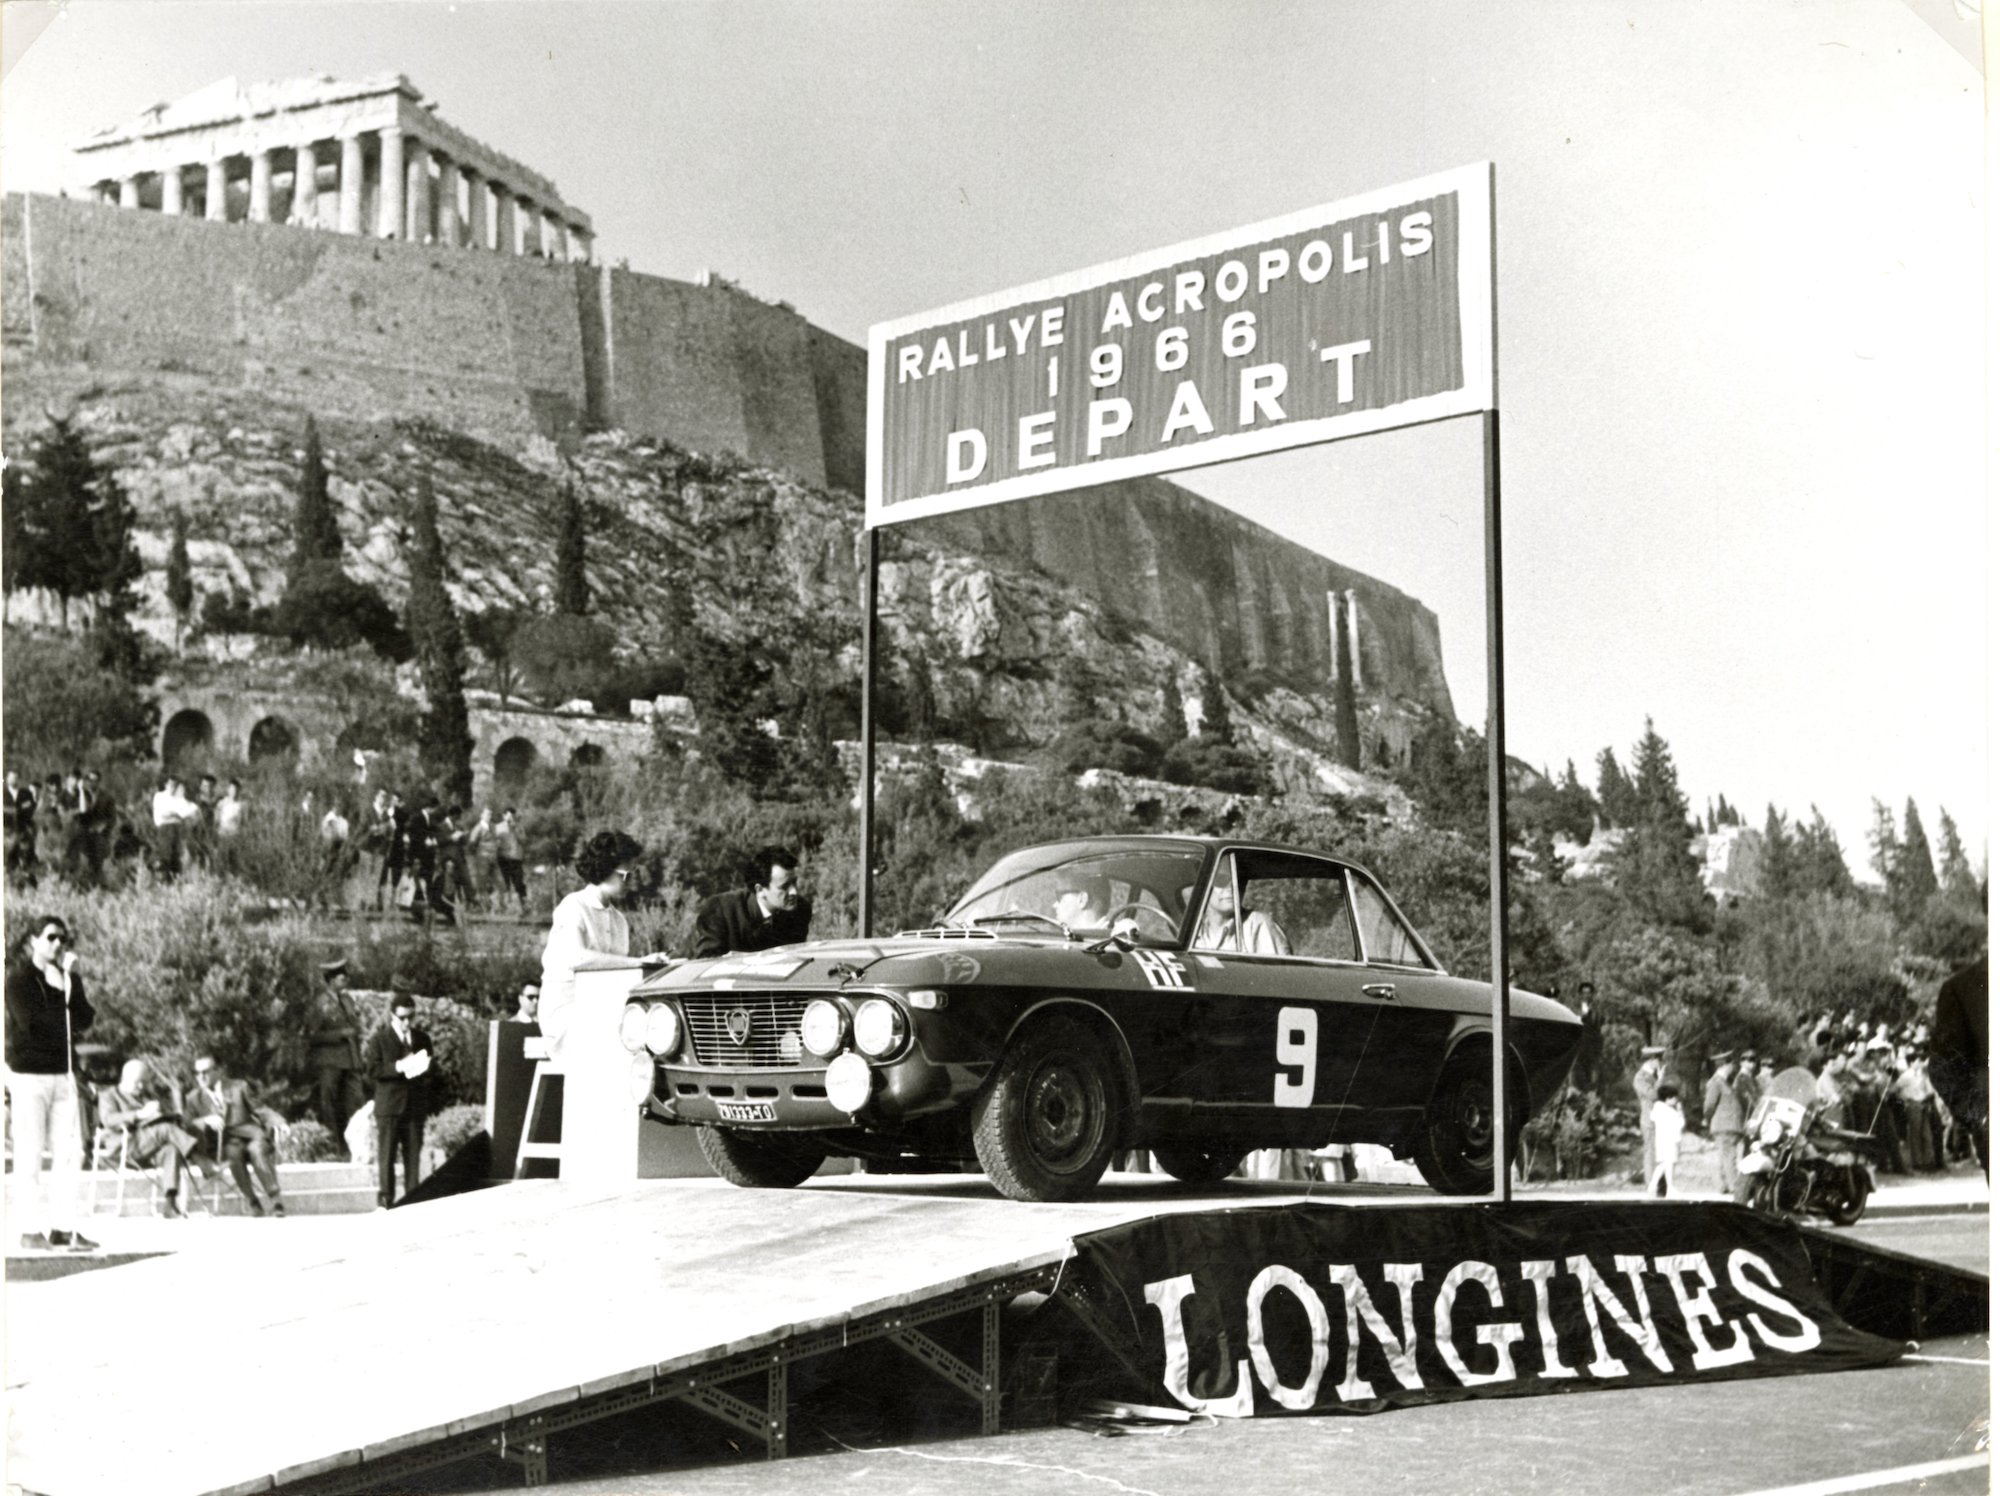 Longines Rally Acrópolis 1966